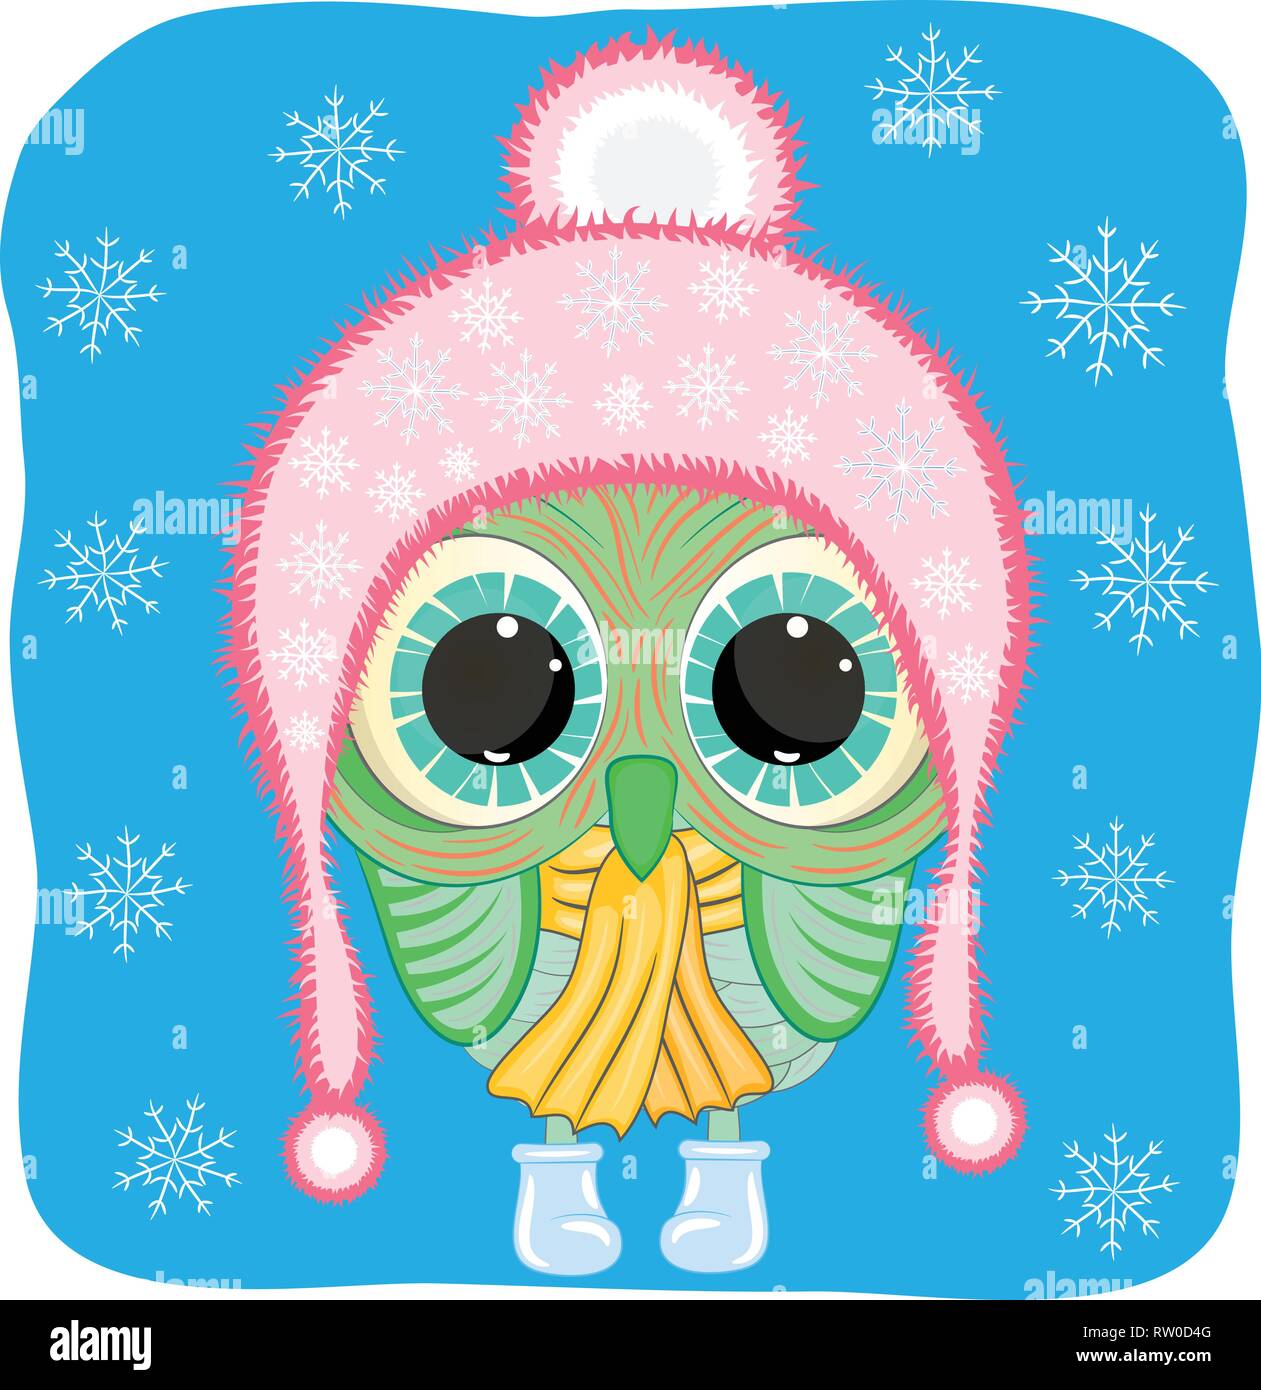 Cute cartoon Eule im Winter Kleidung Vector Illustration Stock-Vektorgrafik  - Alamy